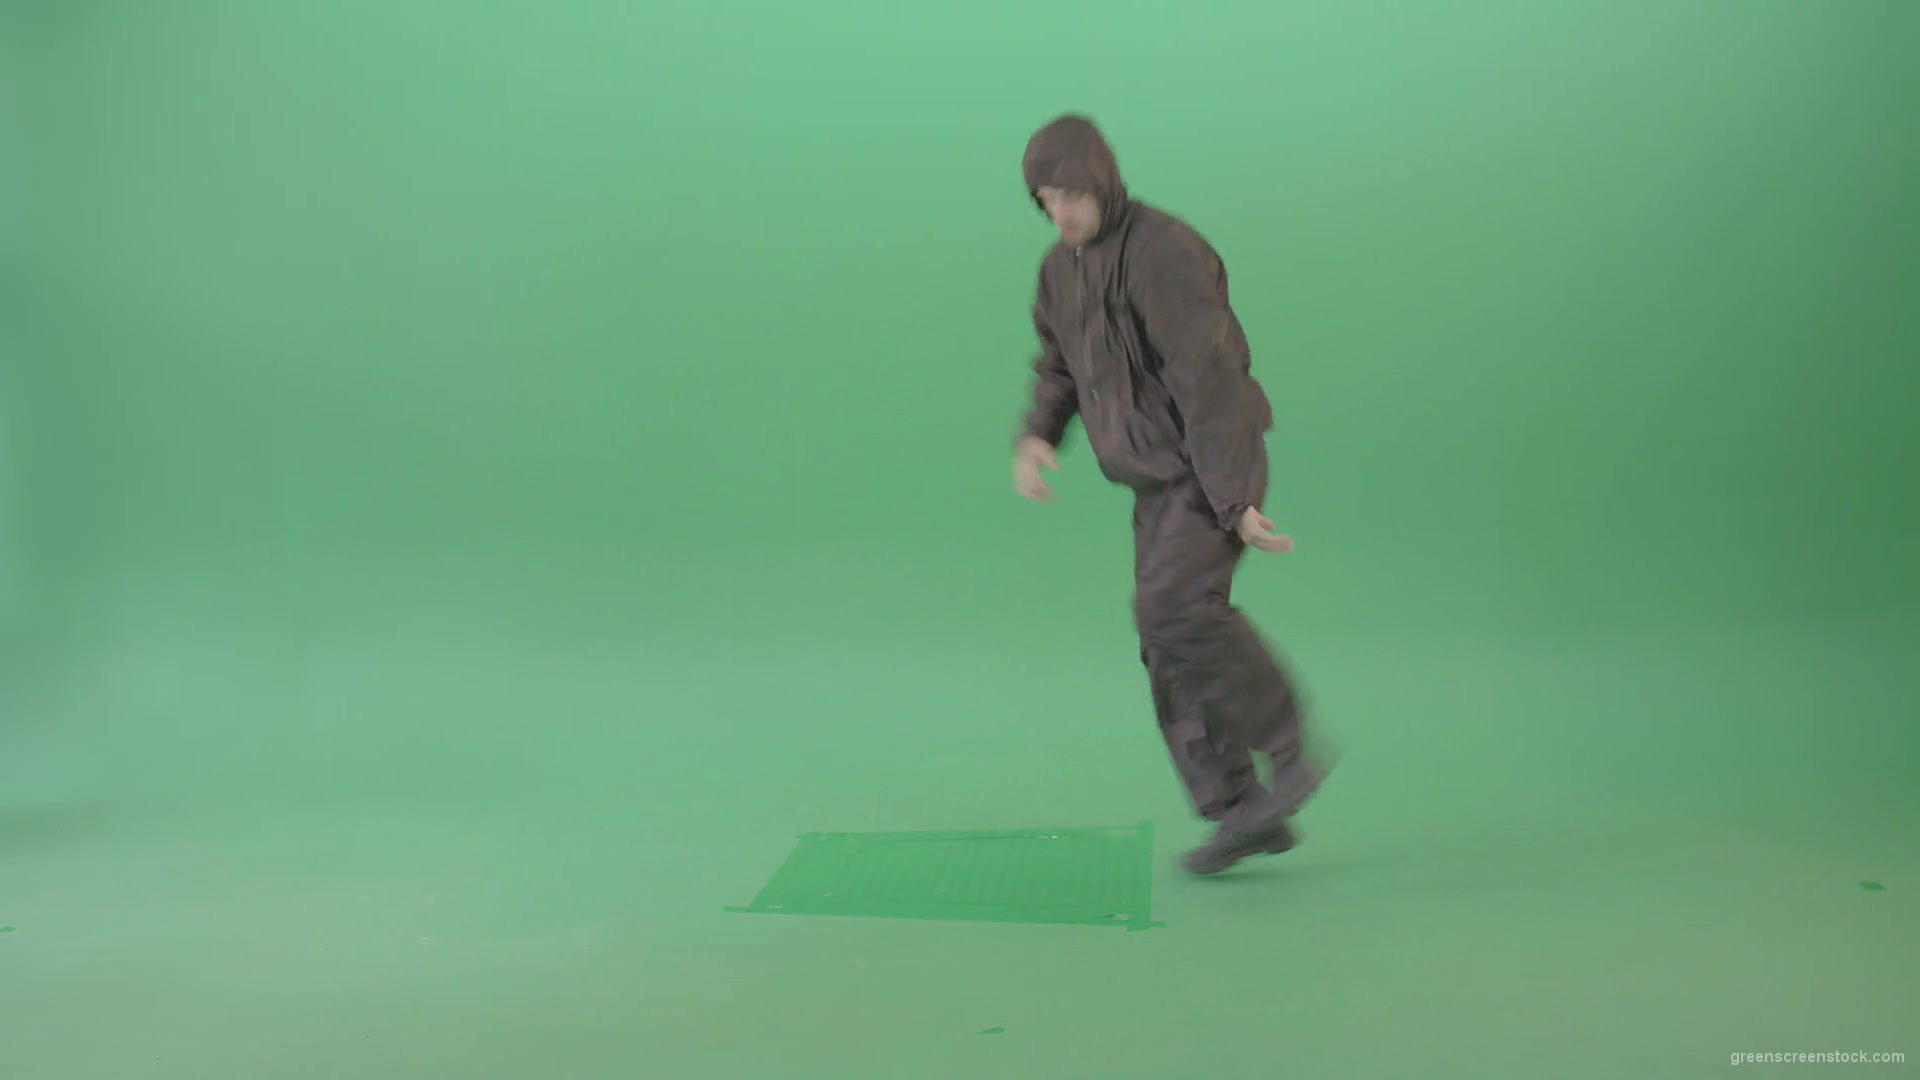 Breakdancer-making-power-move-spinning-on-head-dancing-in-green-screen-studio-4K-Video-Footage-1920_002 Green Screen Stock